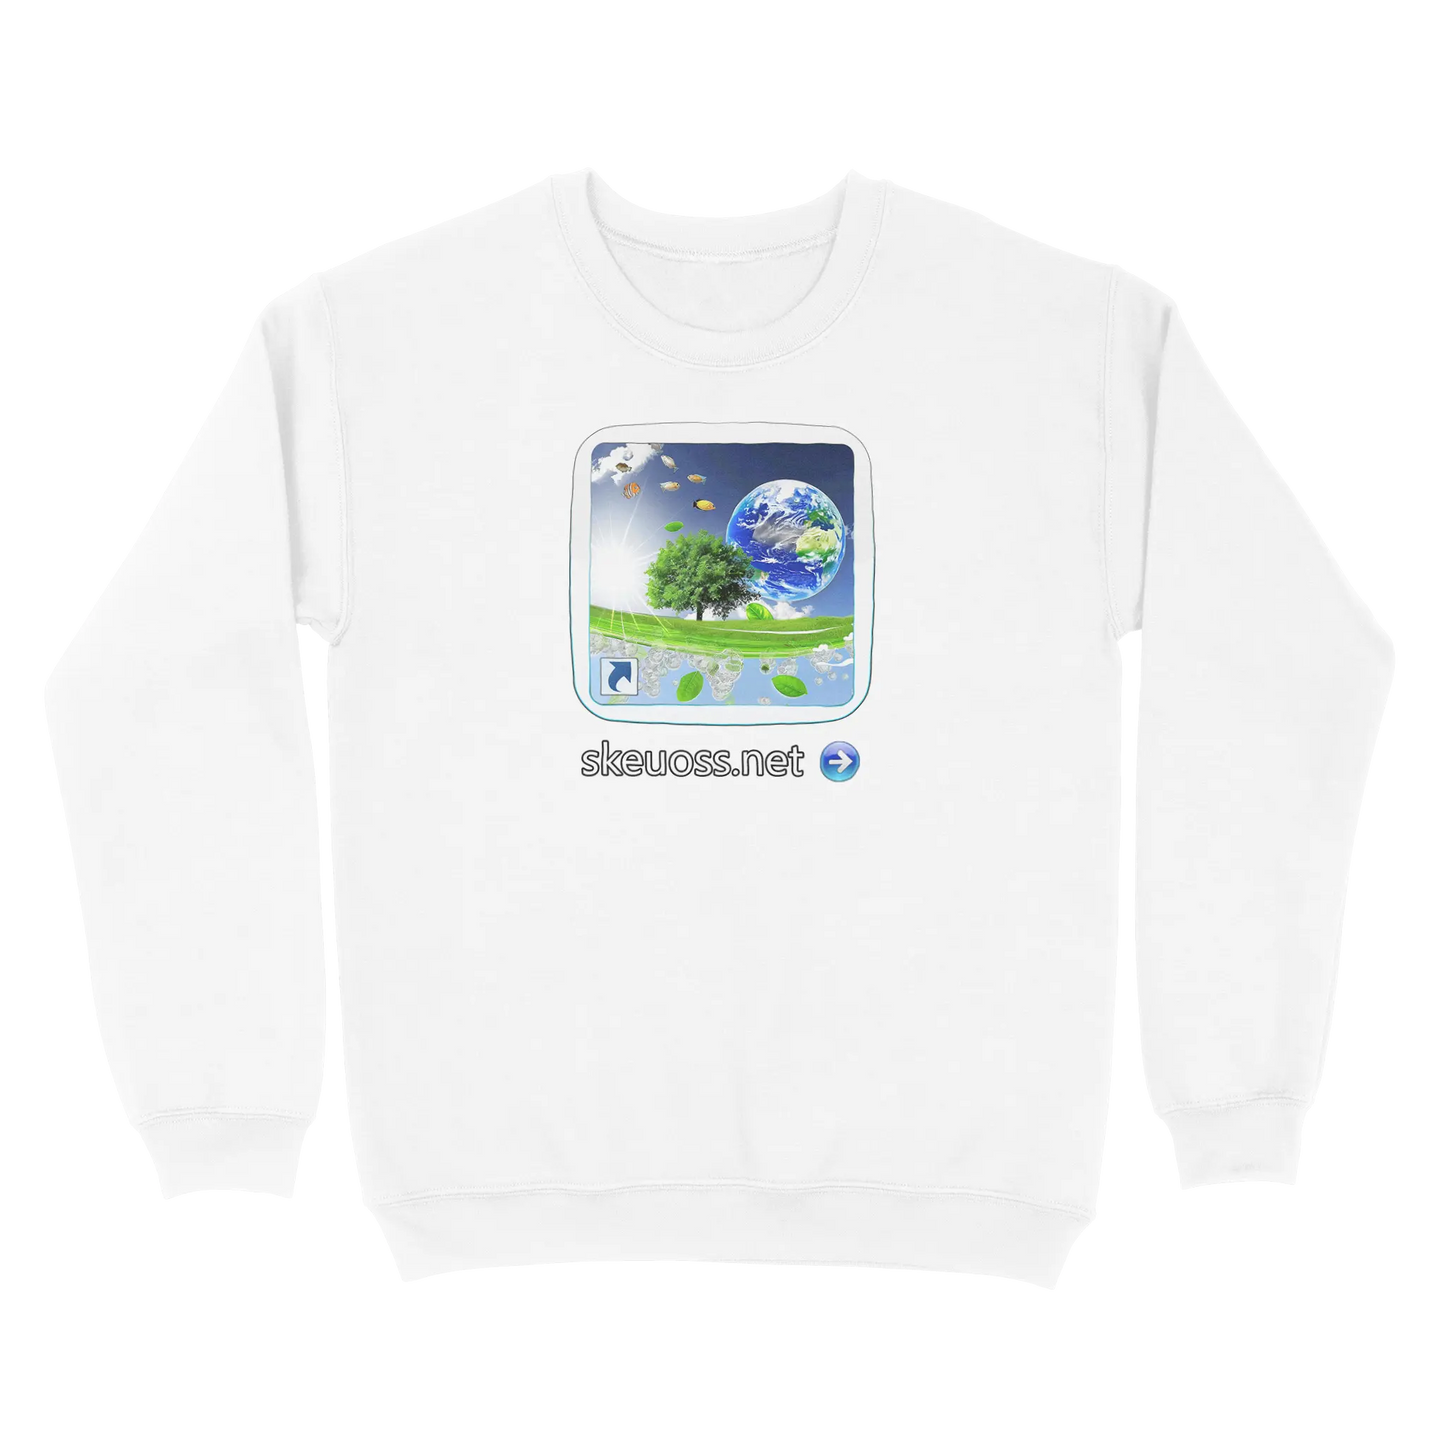 Frutiger Aero Sweatshirt - User Login Collection - User 405